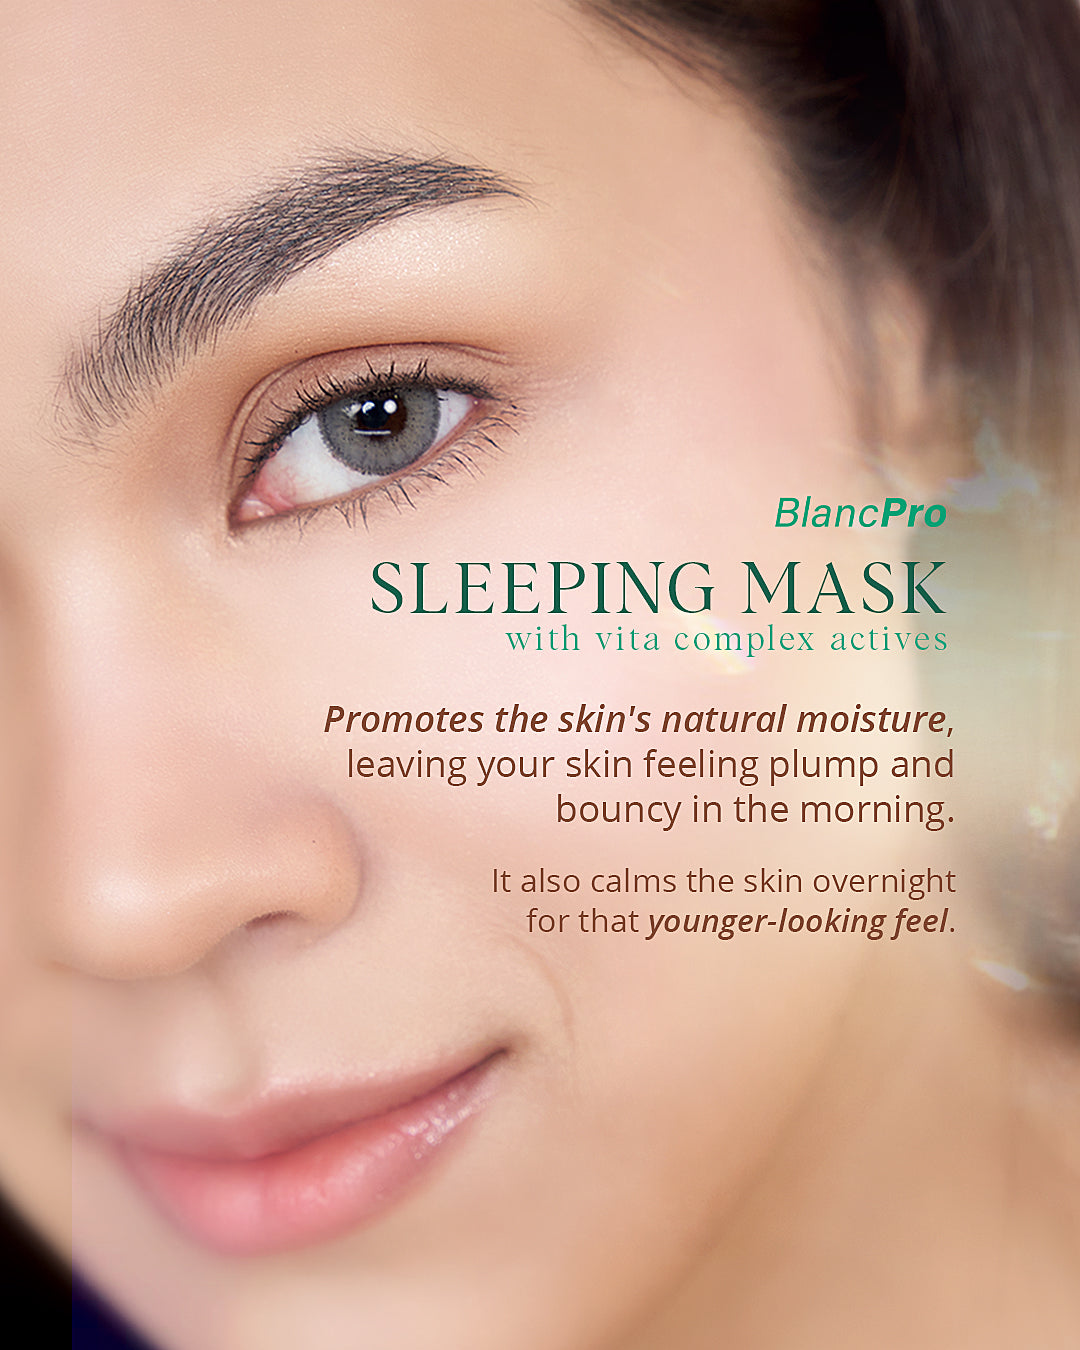 Blanc Pro Sleeping Mask with Vita Complex Actives Blancpro